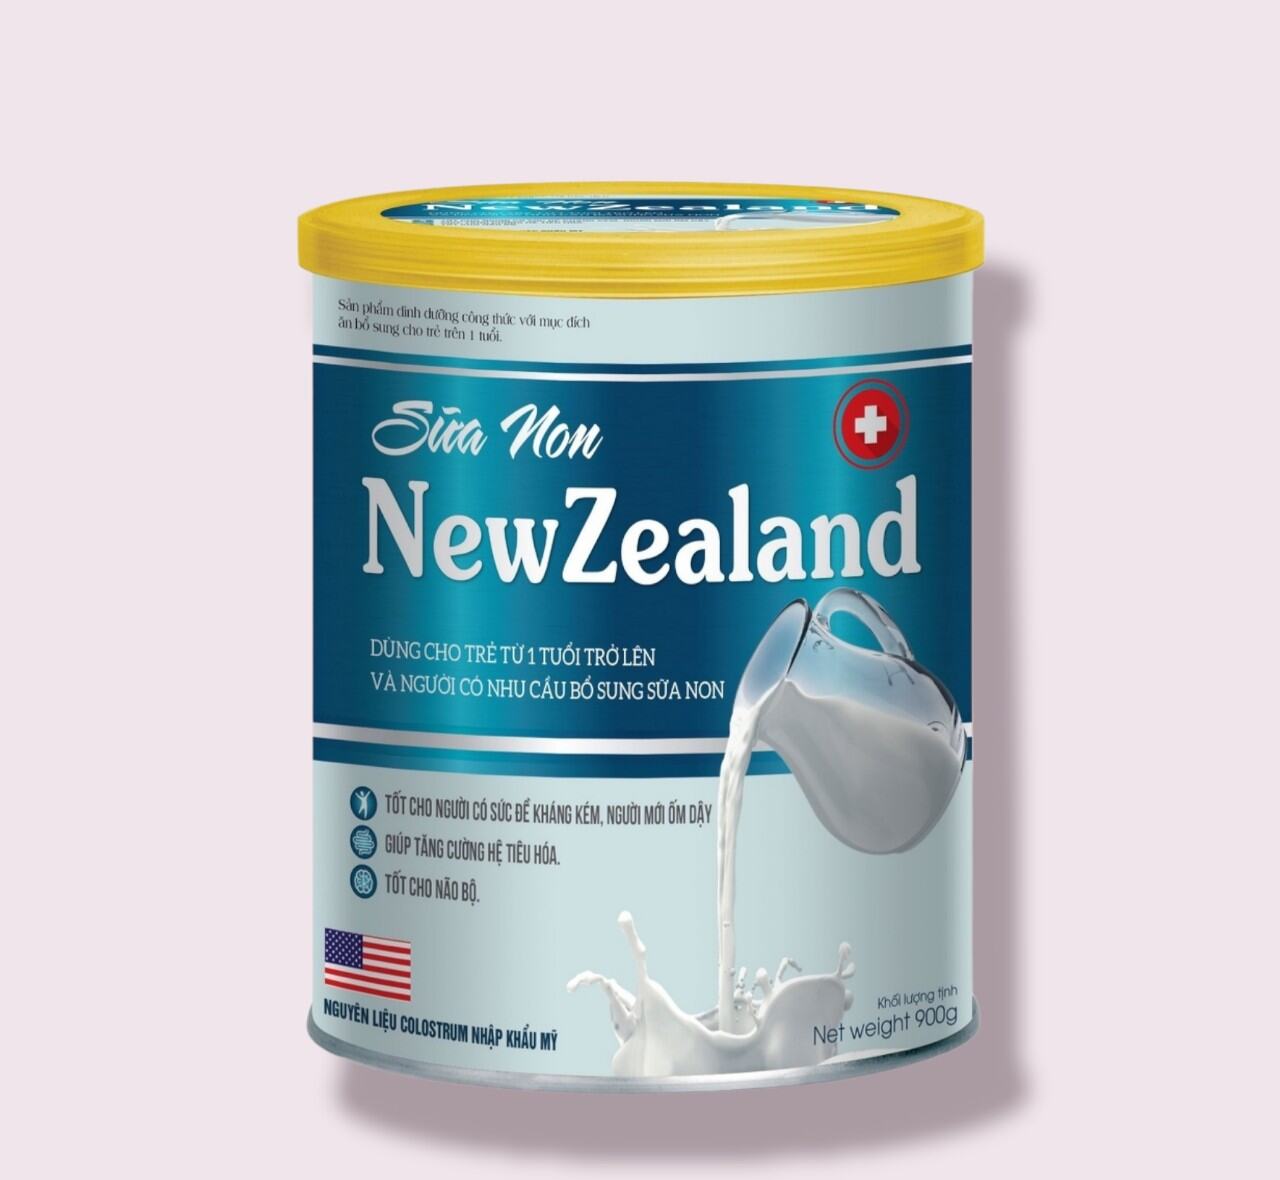 Hộp 900g _ Sữa non New Zealand giúp bổ sung sữa non vitamin khoáng chất